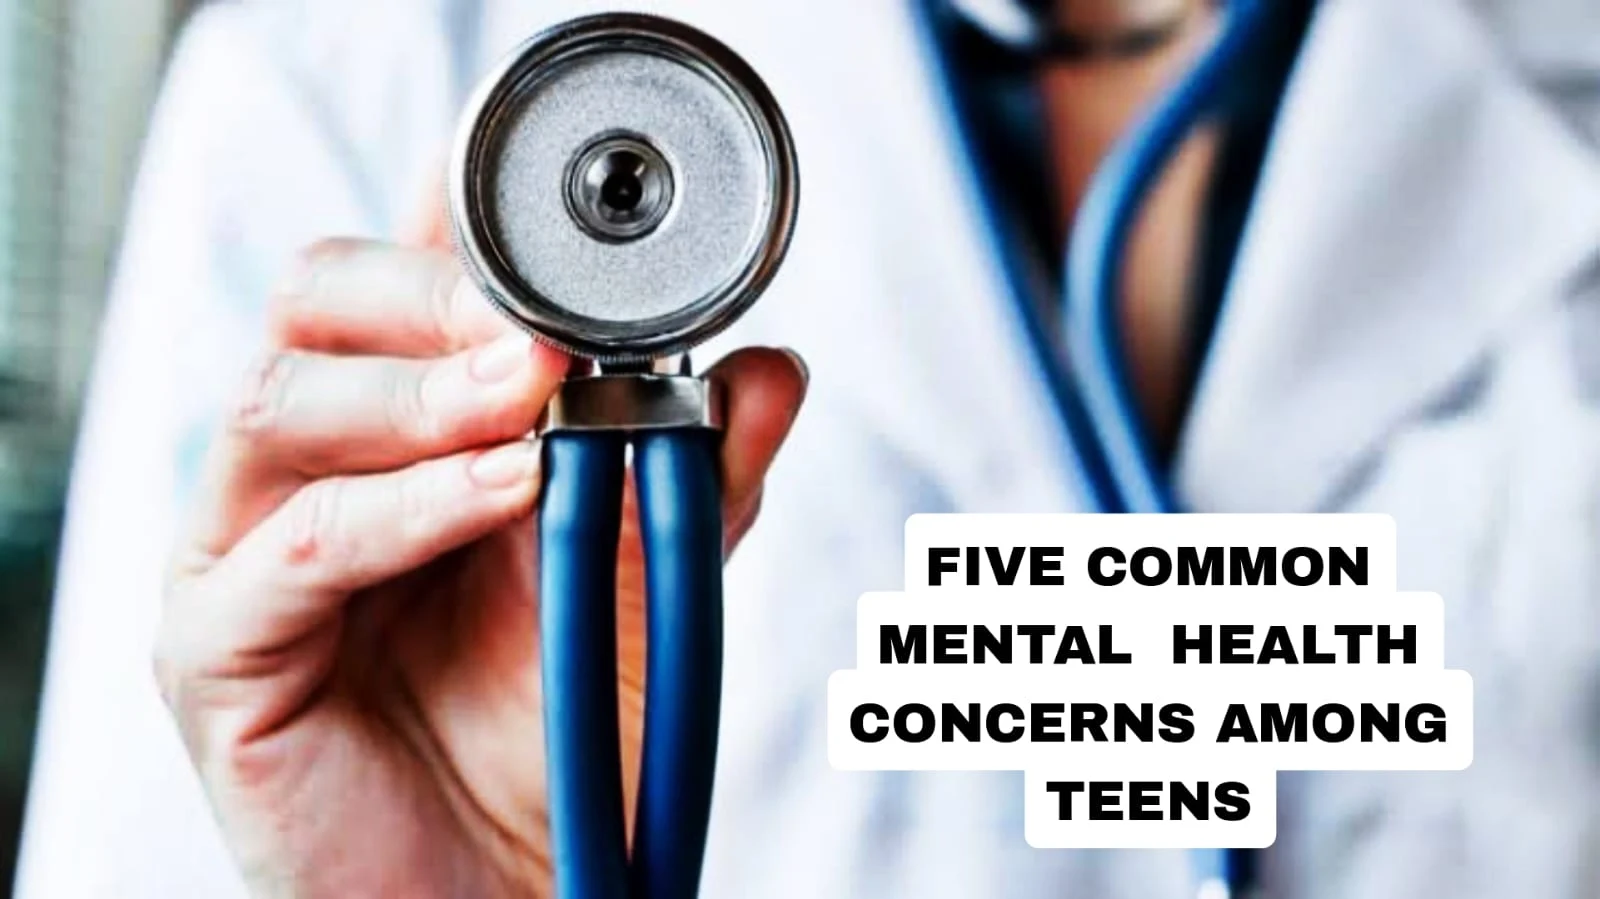 Five common mental health concerns among teens